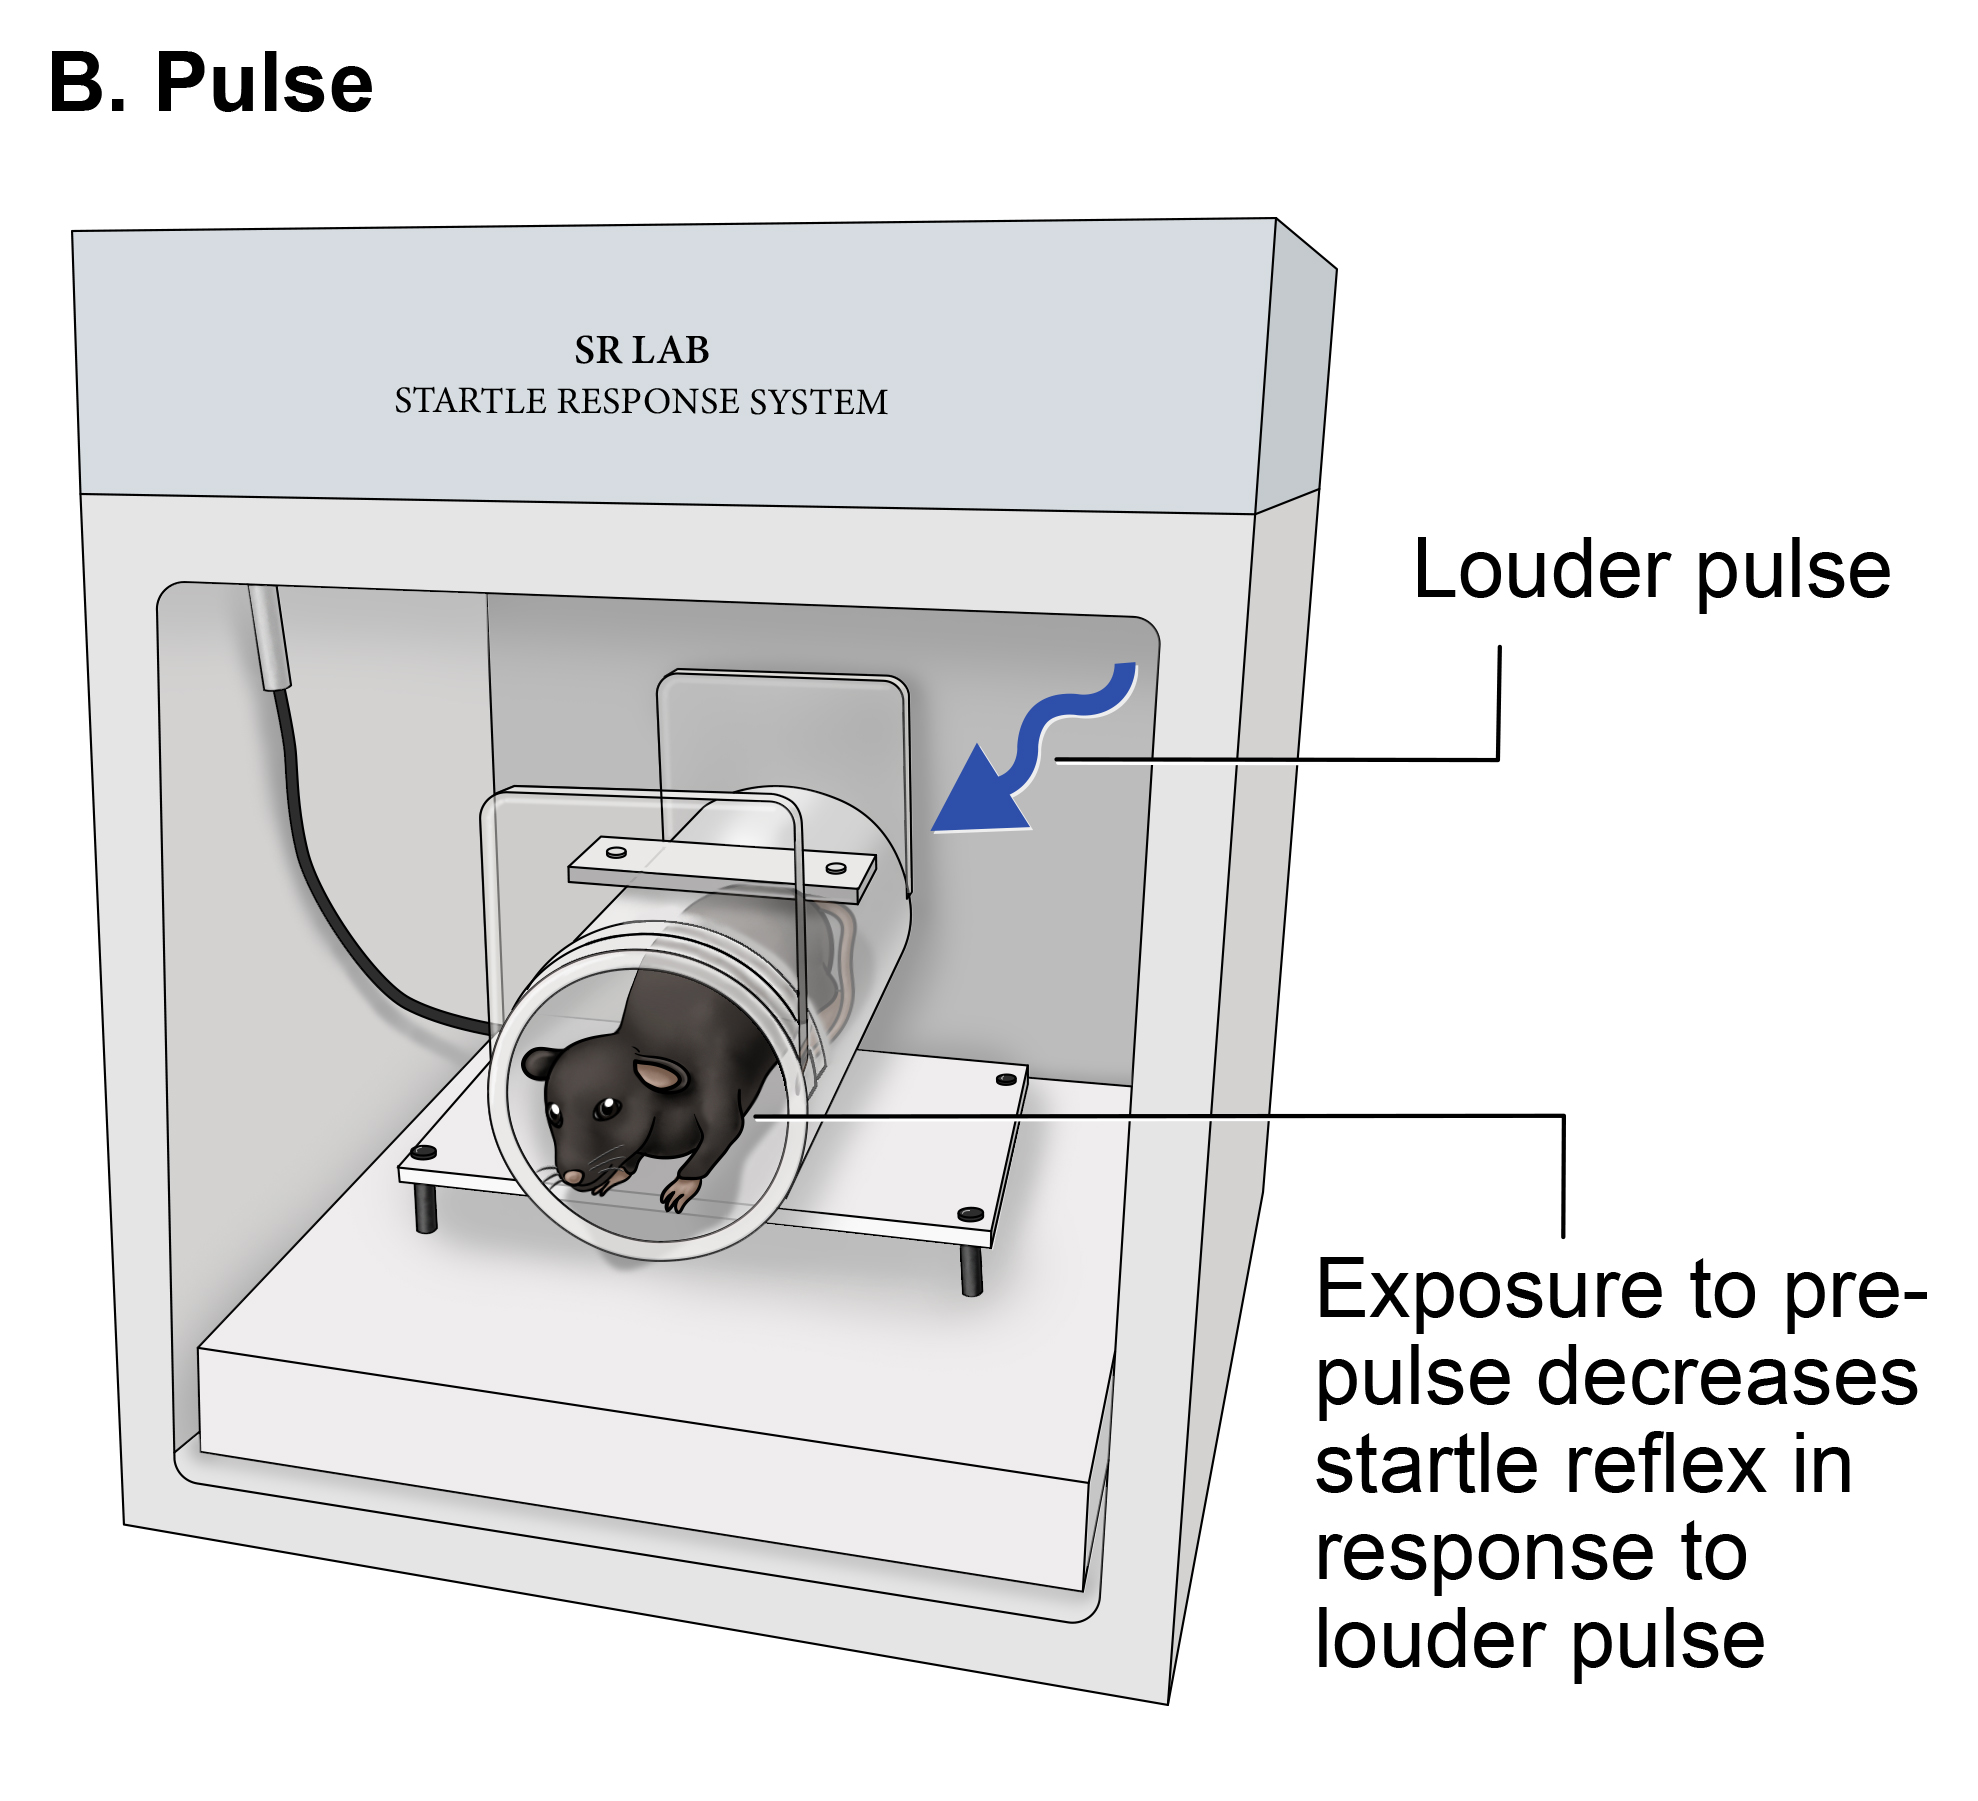 Pulse inhibition B (louder pulse)